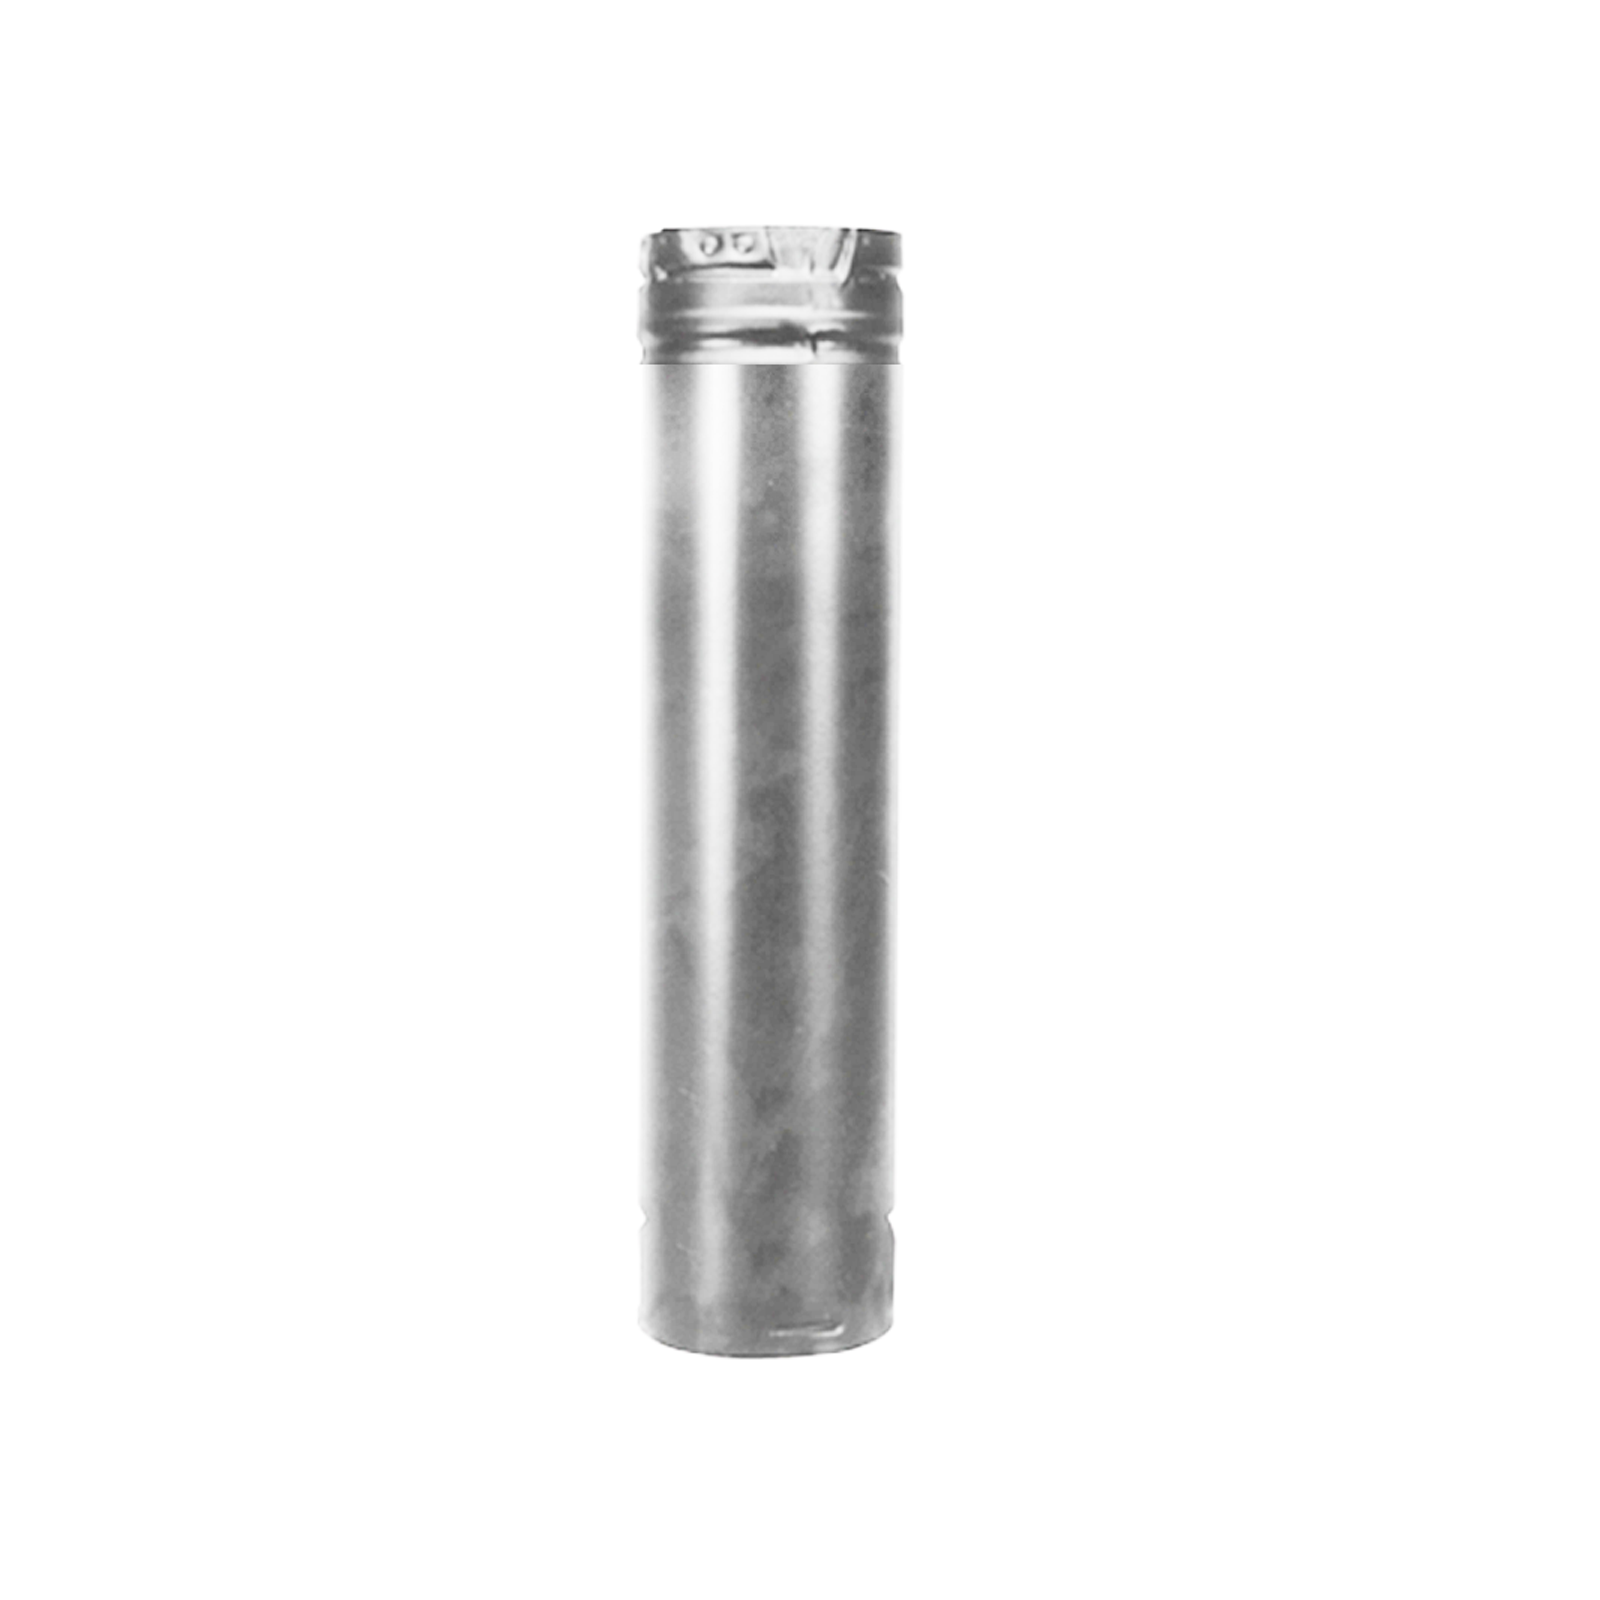 DuraVent Pellet Vent Pro 6" Straight Length Pipe | 3PVP-06